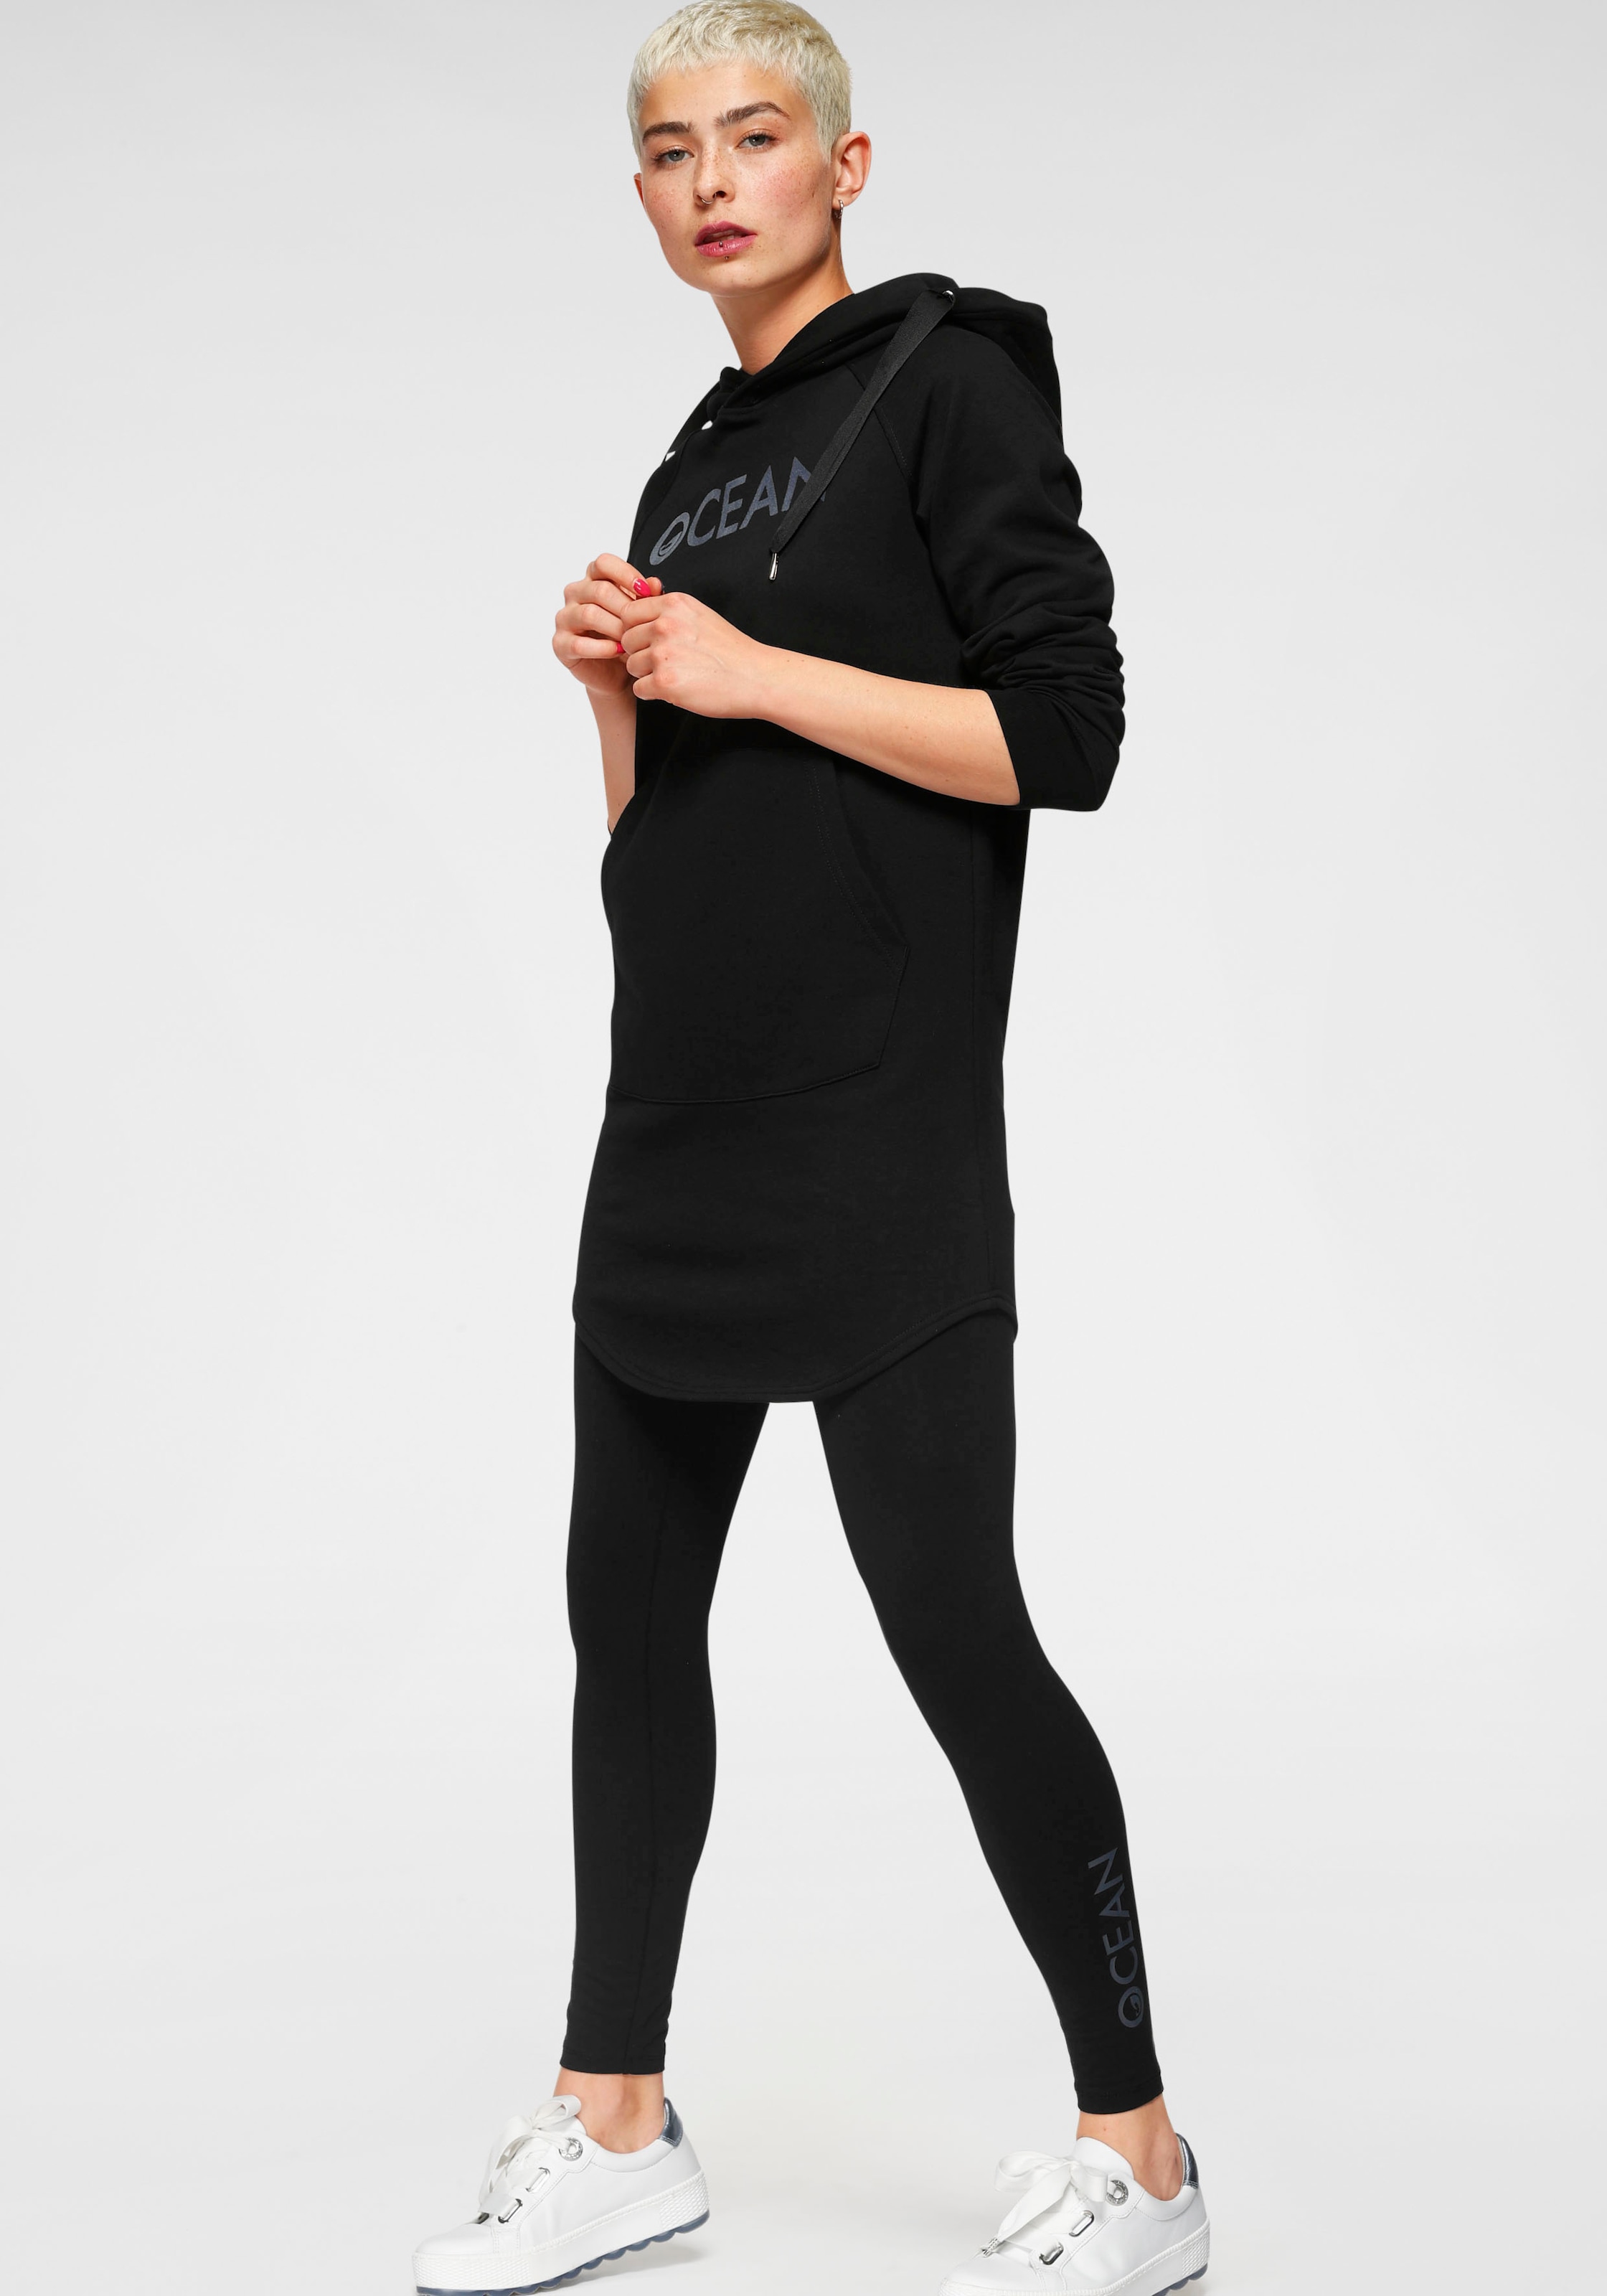 Ocean Sportswear Jogginganzug »Essentials Joggingsuit«, (Packung, Leggings) tlg., 2 versandkostenfrei auf mit